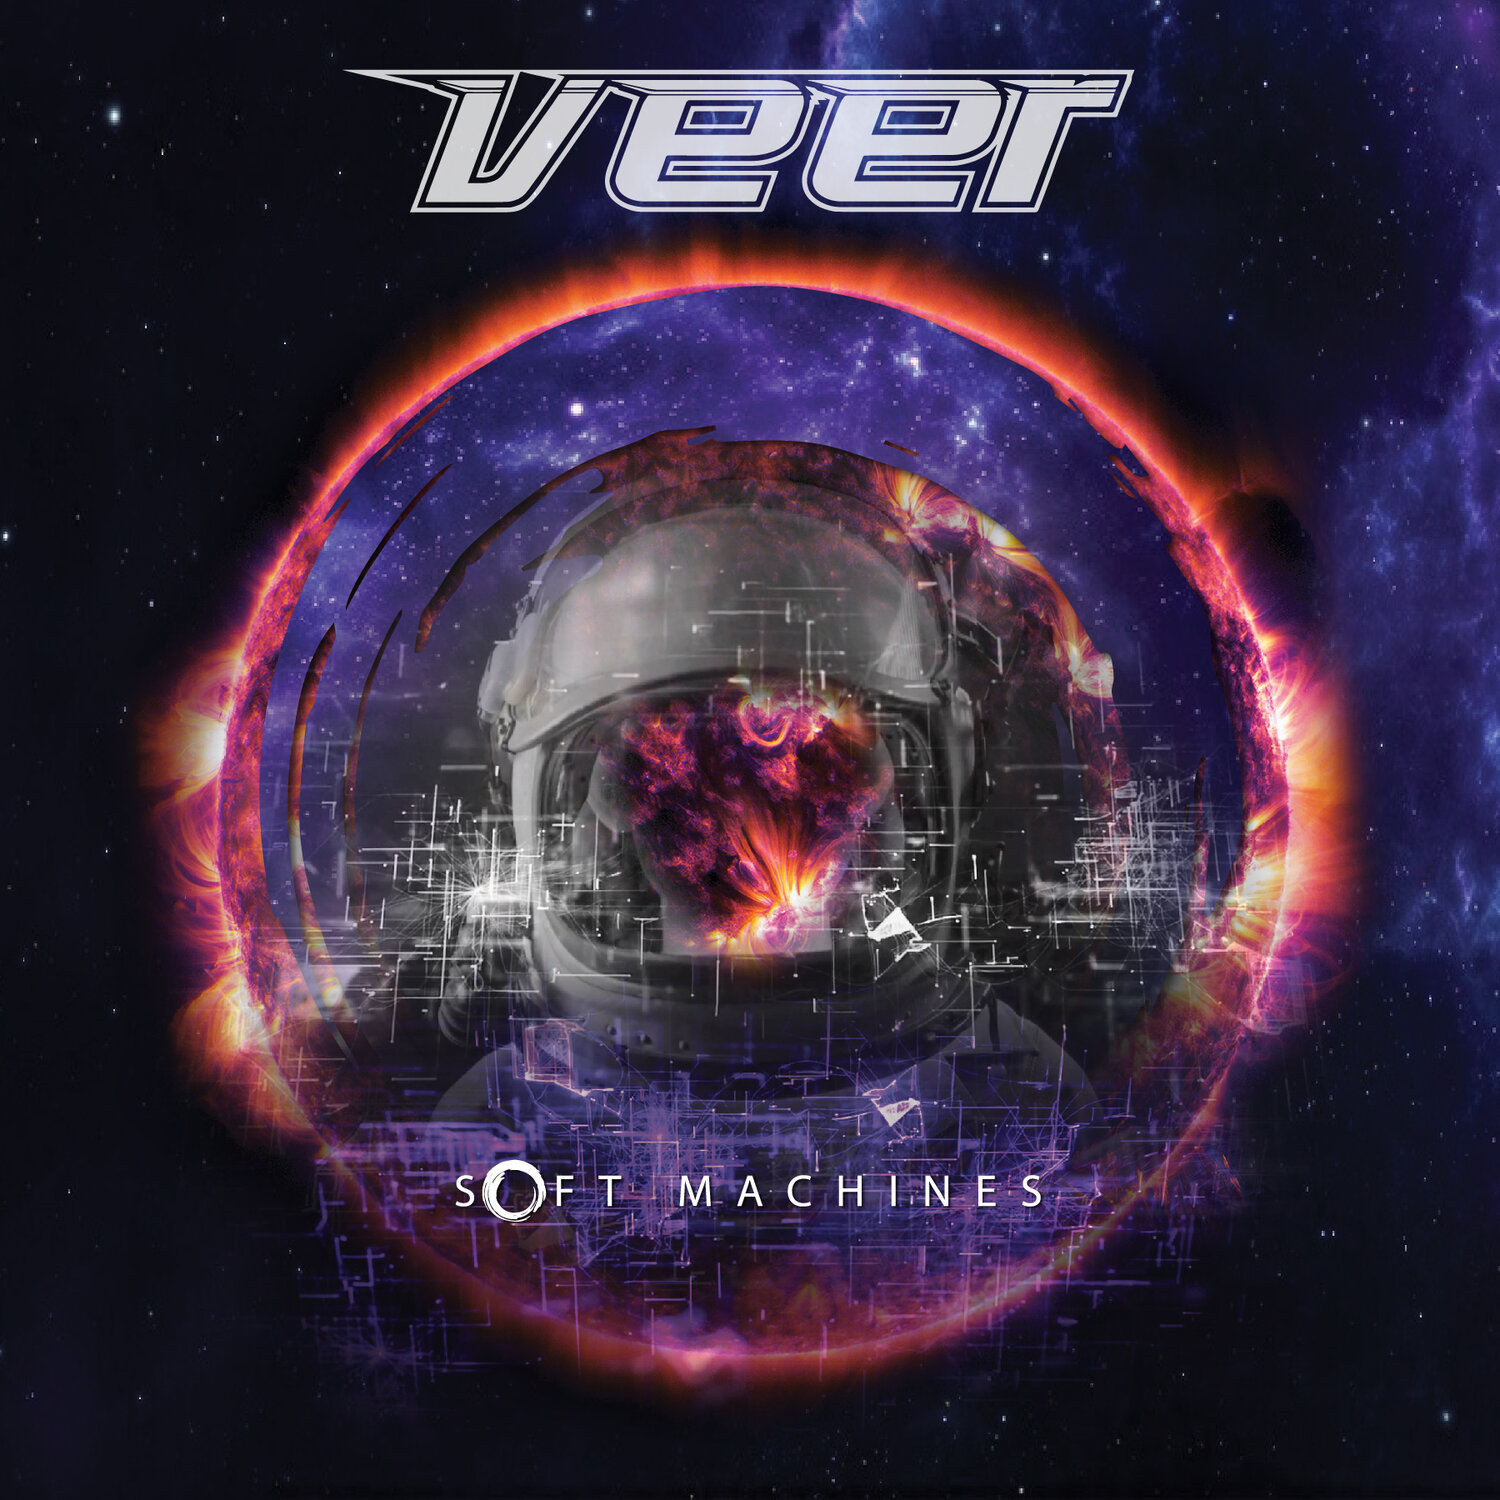 VEER considers “Soft Machines” their space album.